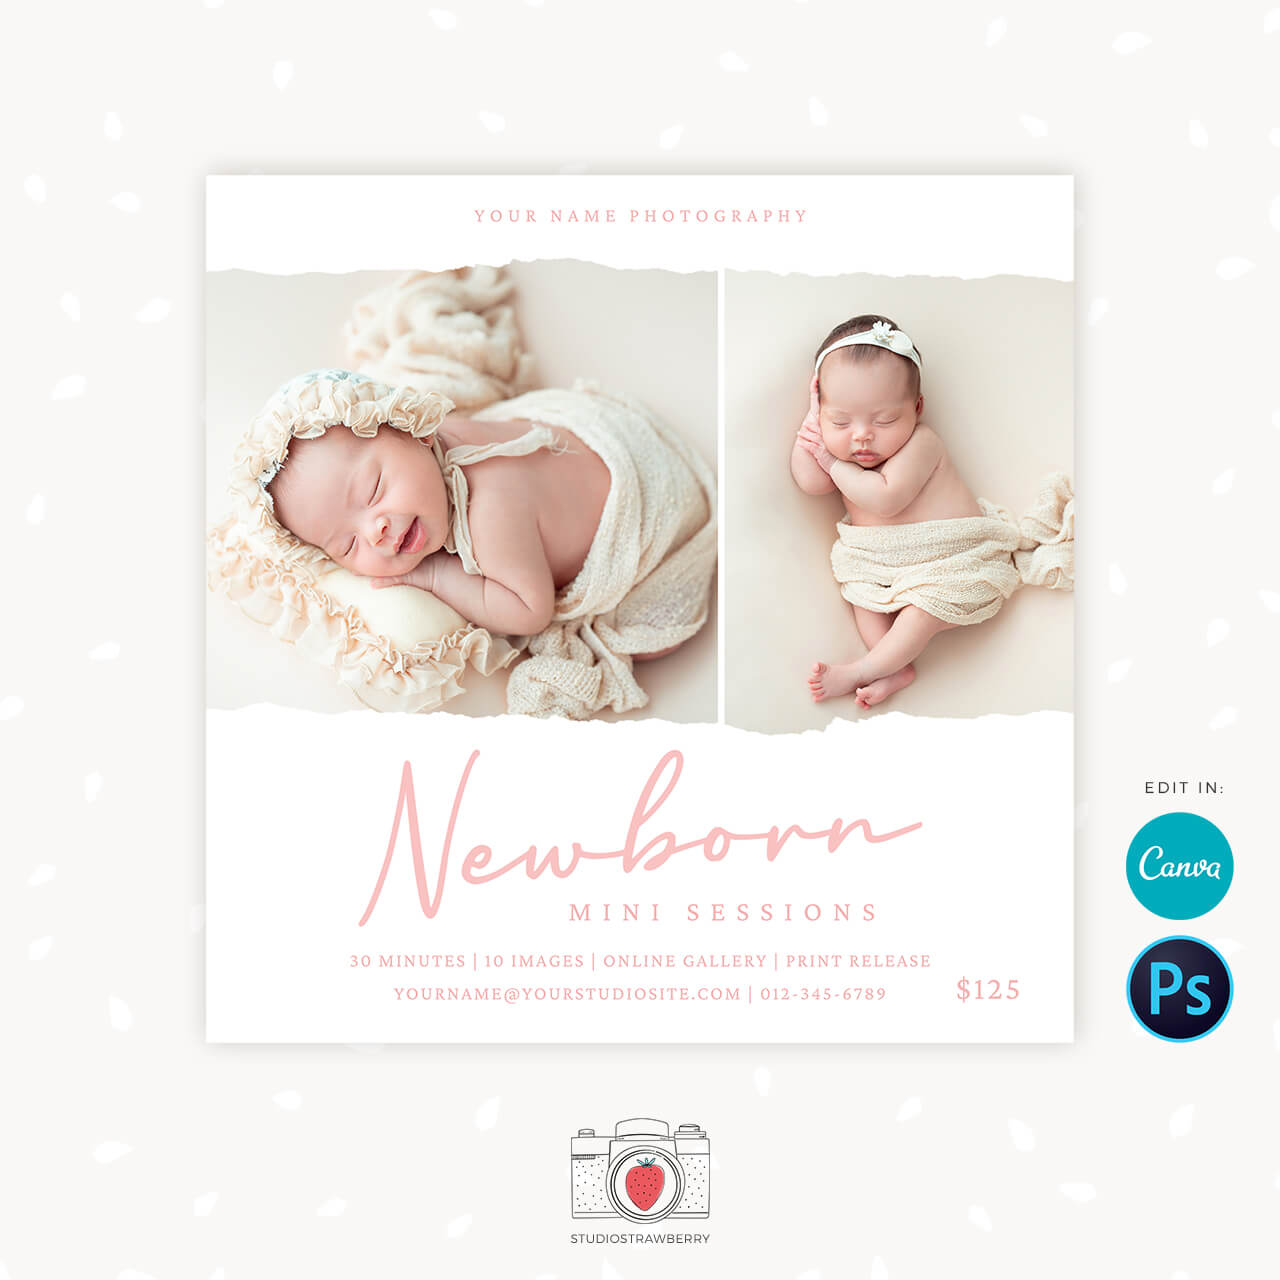 Newborn mini sessions template Canva